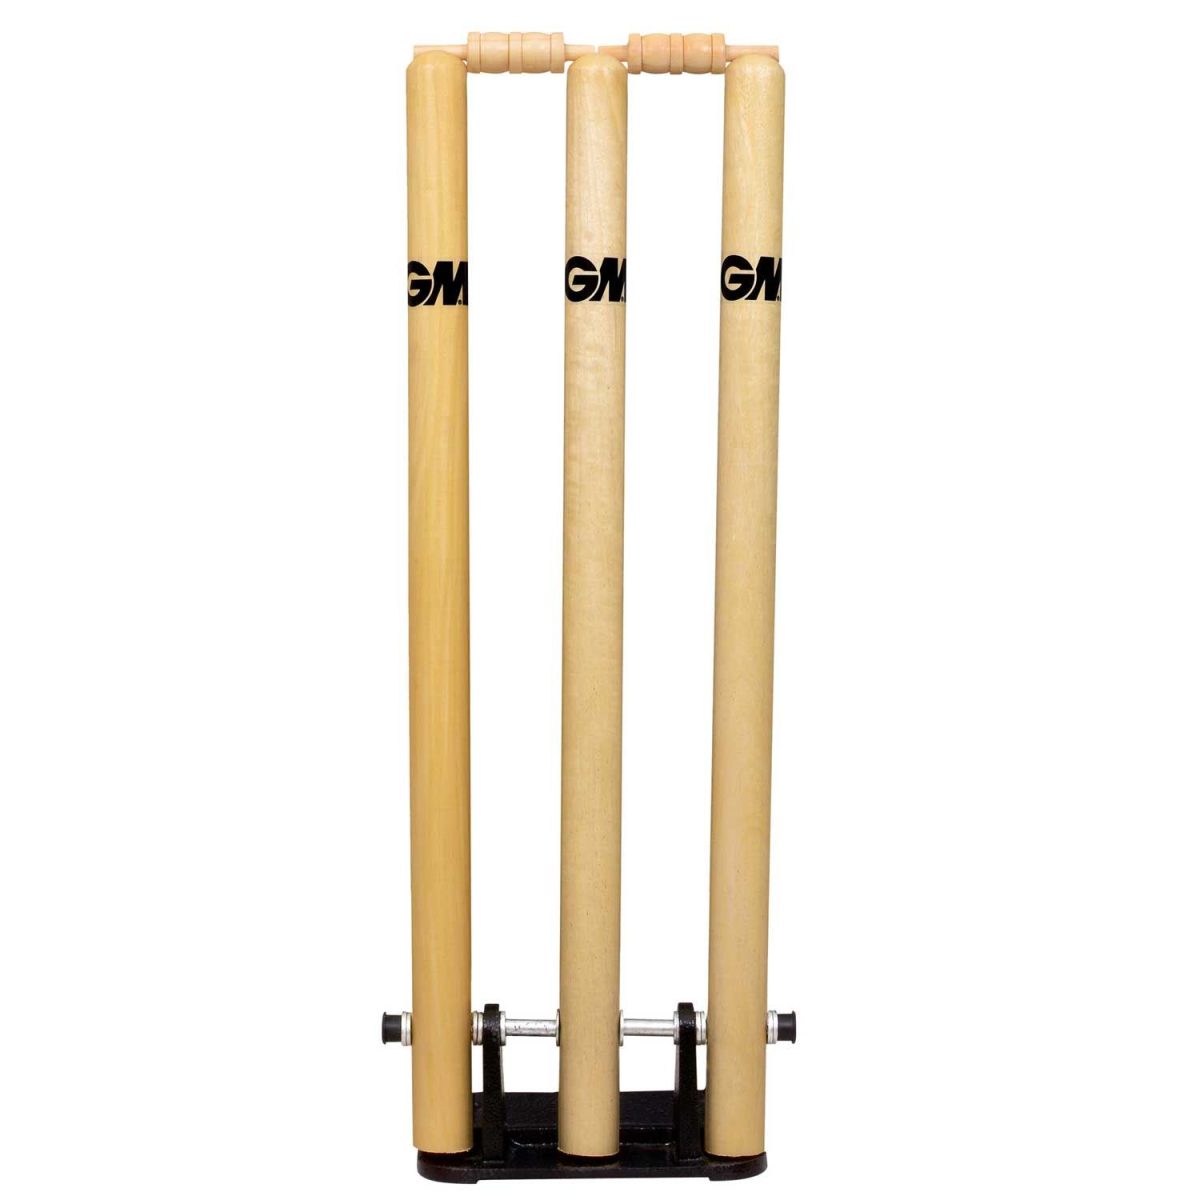 GM Spring Cricket Stumps Set of 3 Stumps & 2 Bails (With Iron Base)